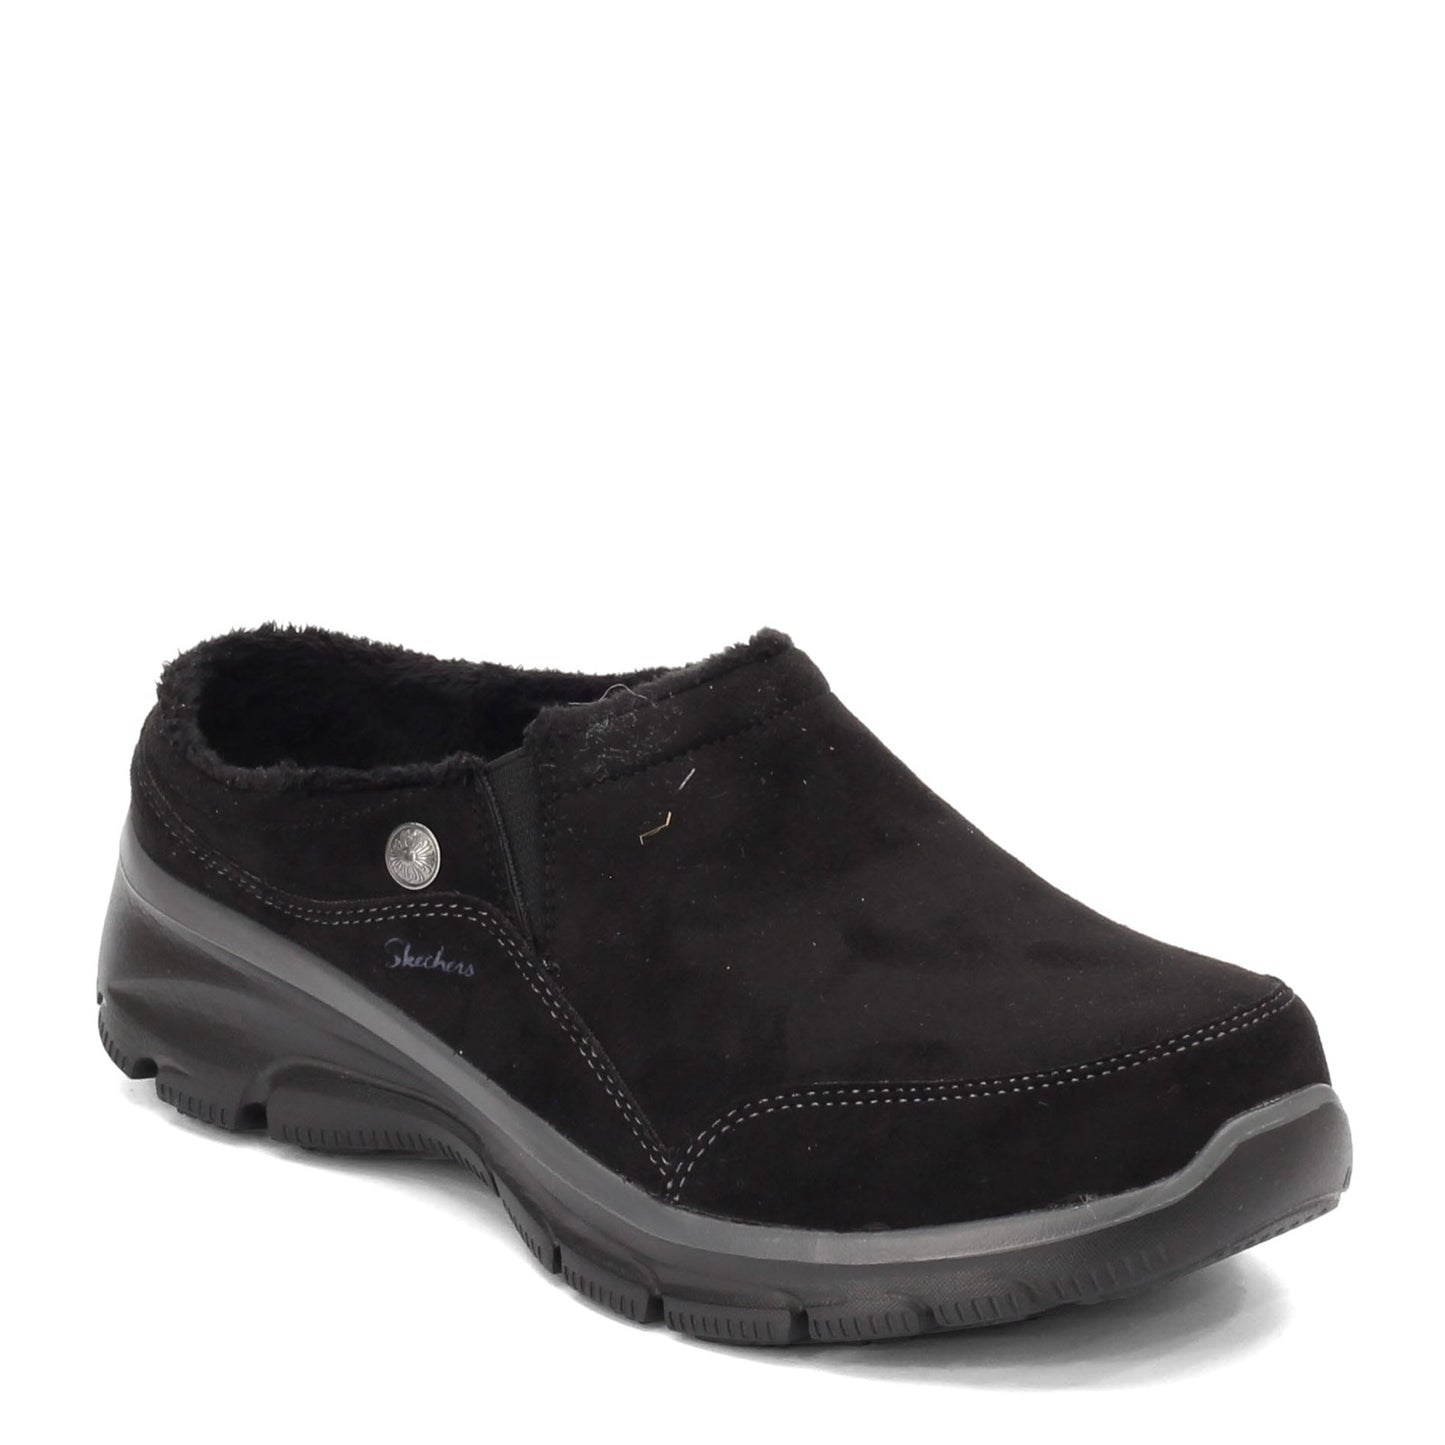 Peltz Shoes  Women's Skechers Relaxed Fit: Easy Going Clog BLACK 49532-BLK